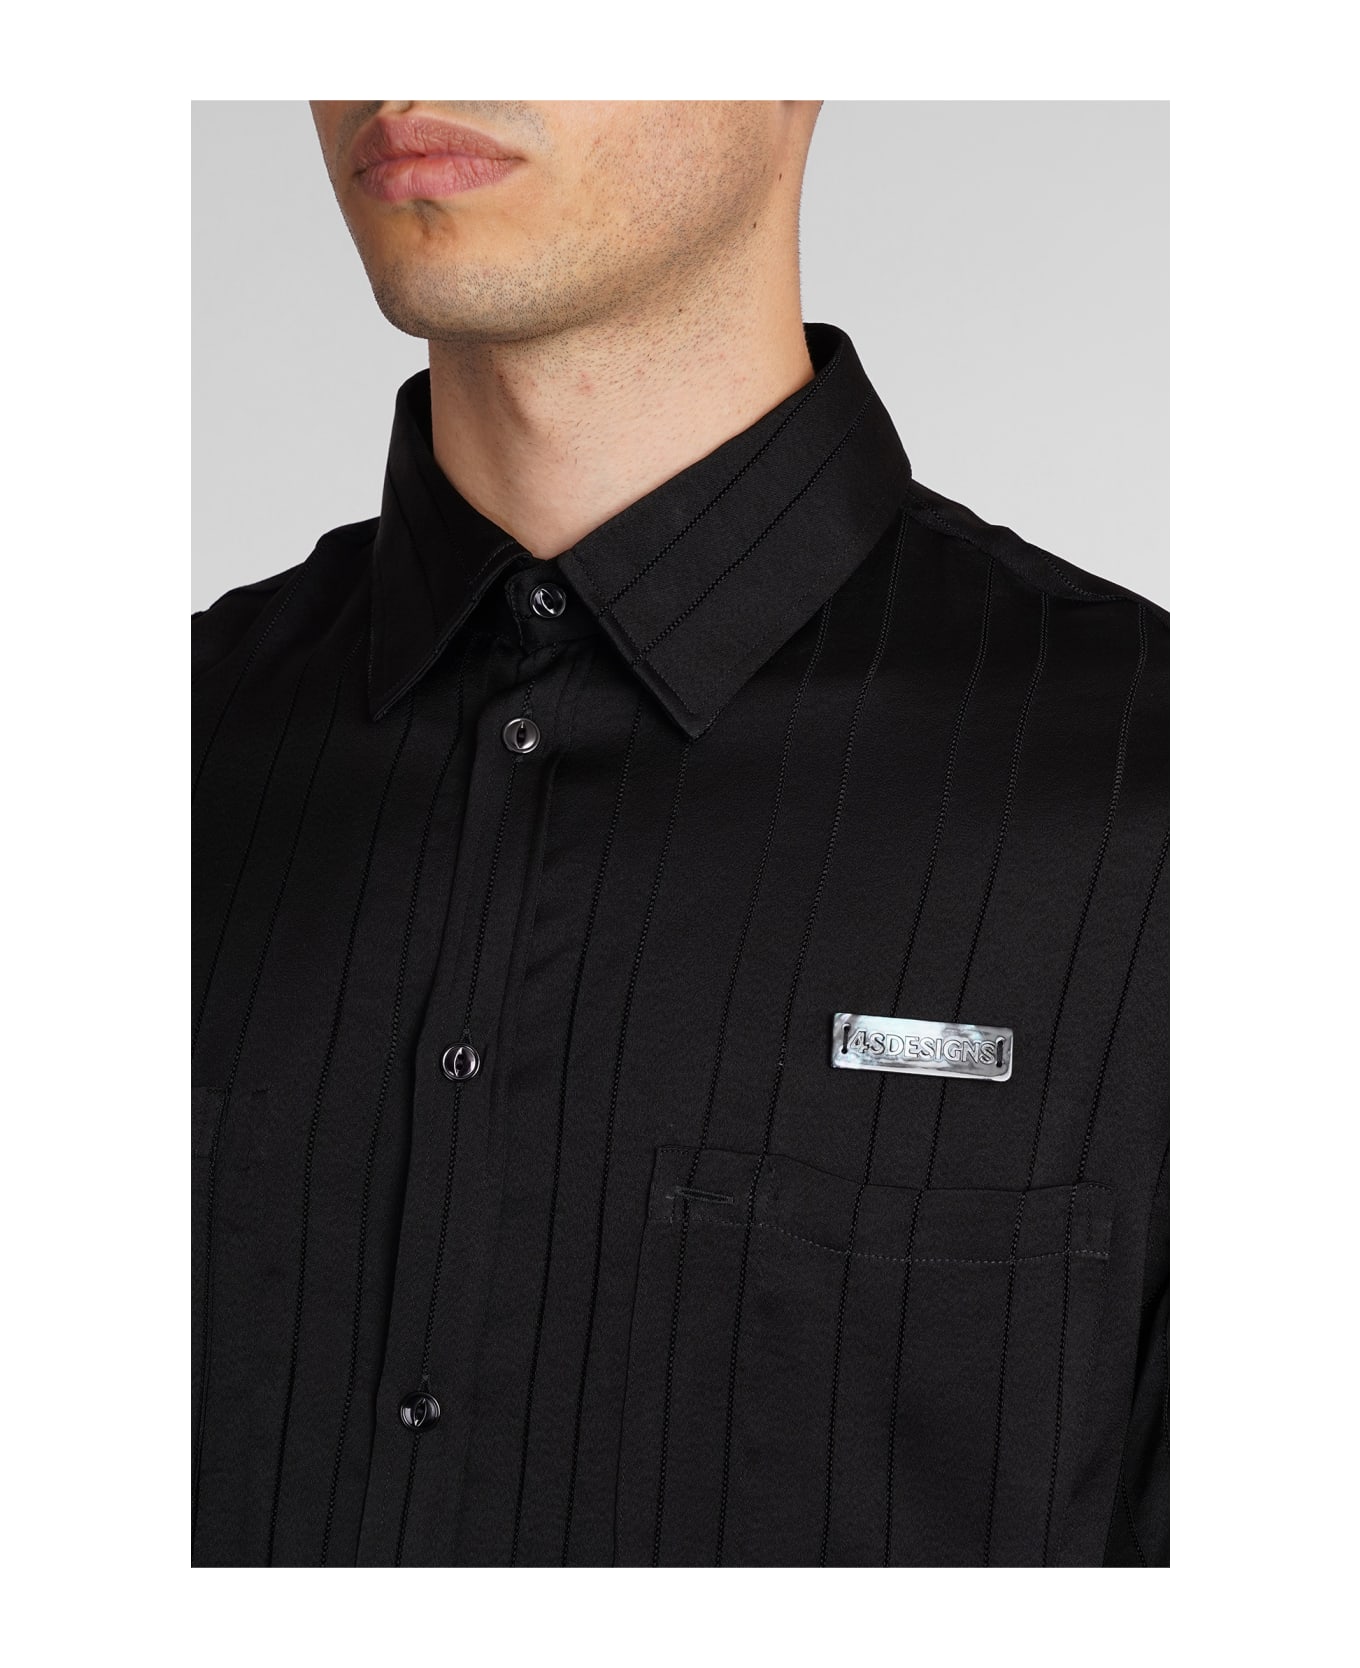 4sdesigns Shirt In Black Triacetate - black